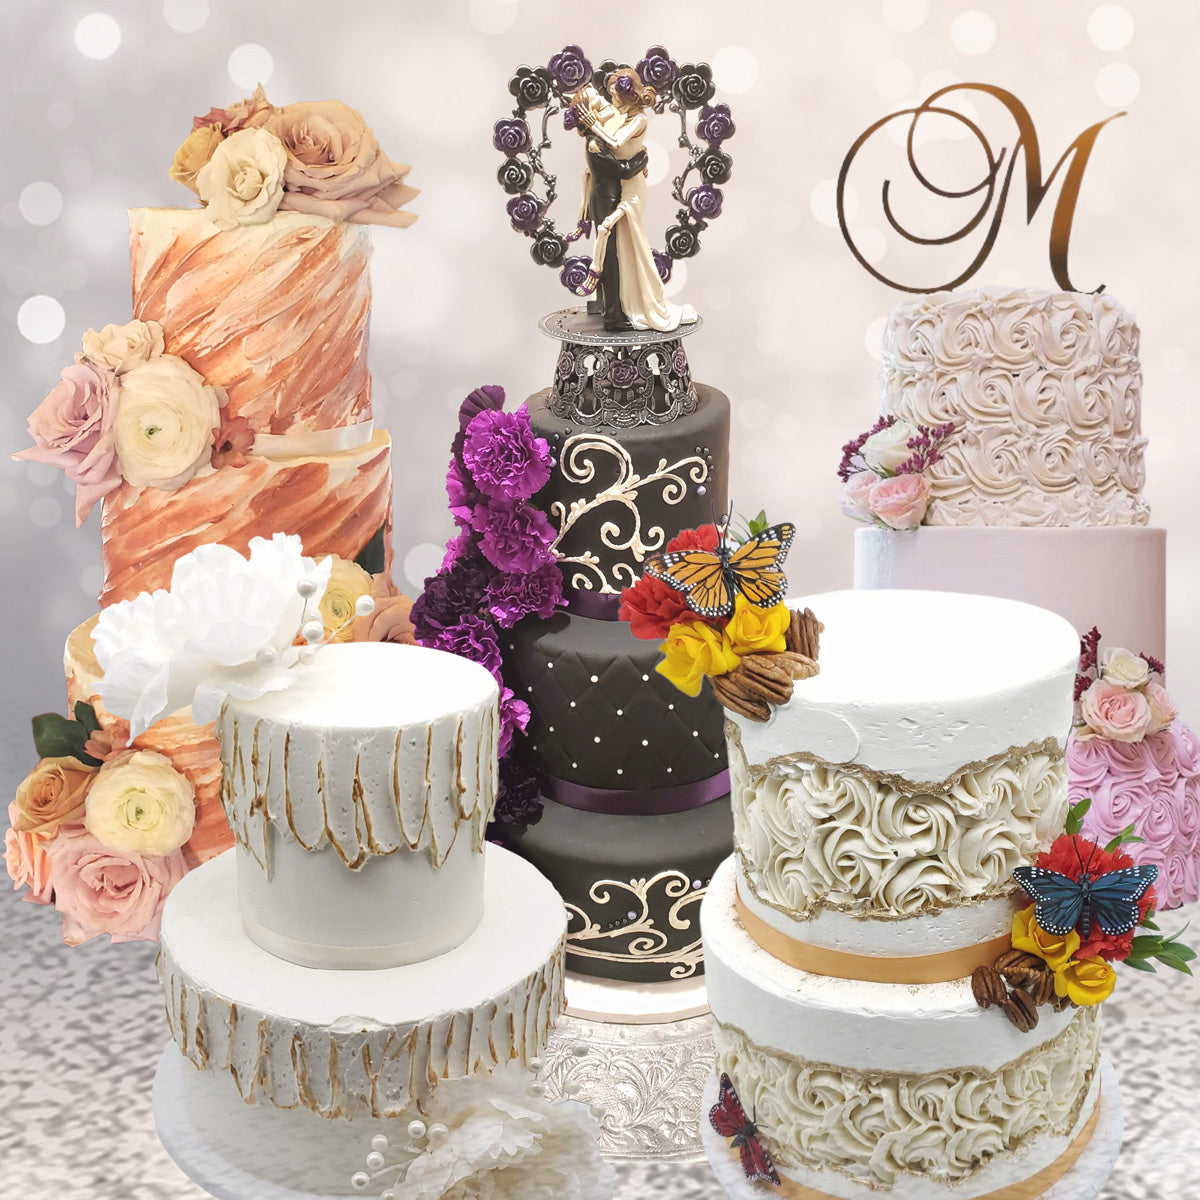 Custom Wedding Cake Order - Save The Date w/Silver Rose Bakery!